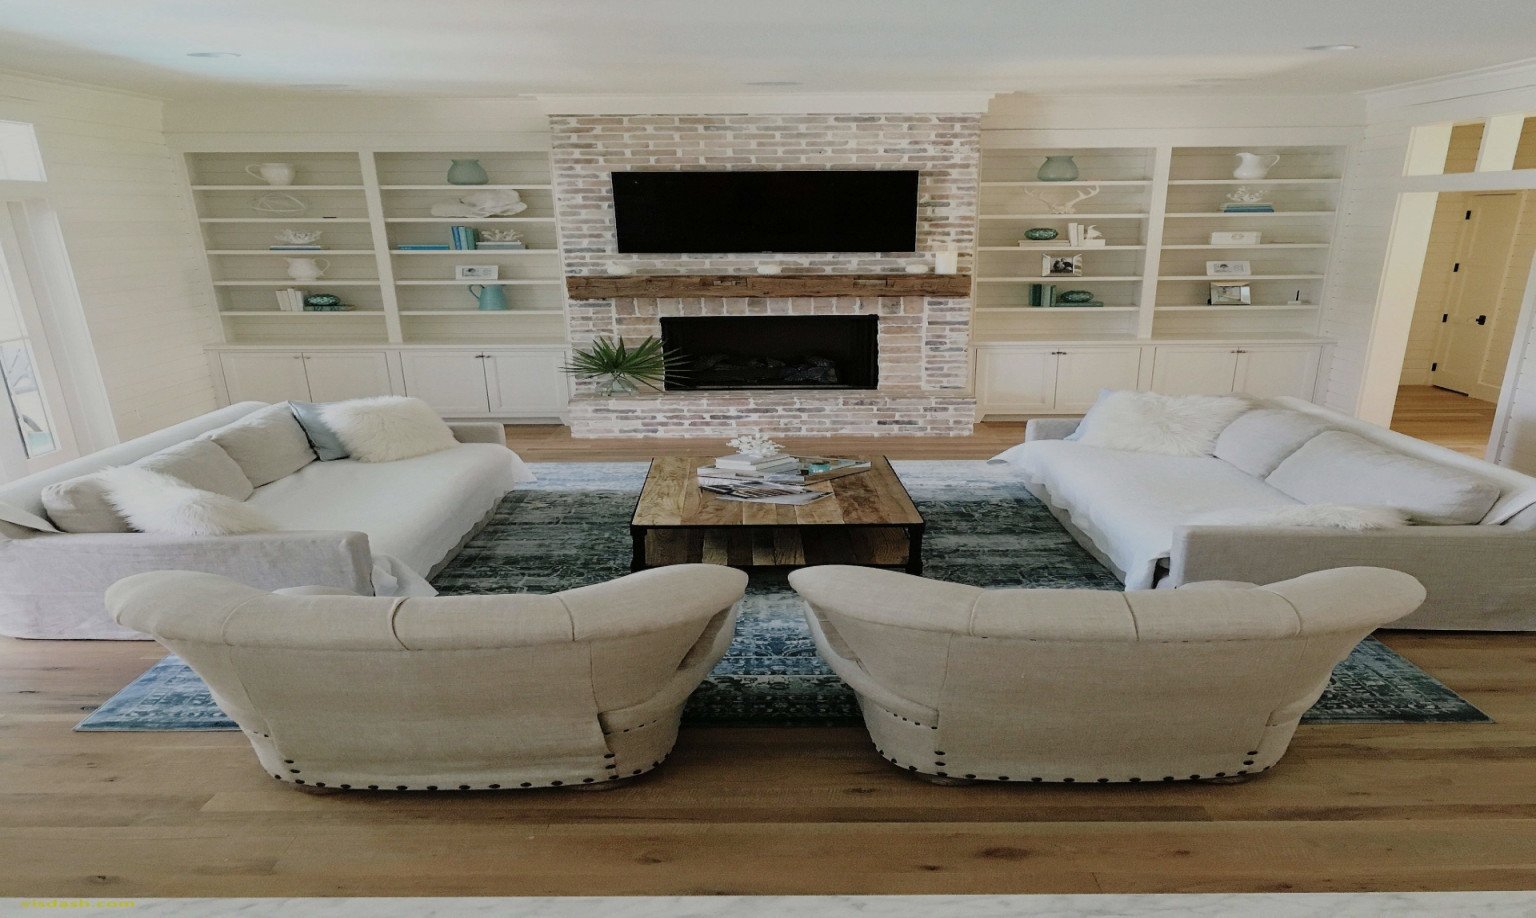 Sofa for Bedroom Sitting area Beautiful 14 Perfect Hardwood Floor and Wall Color Binations